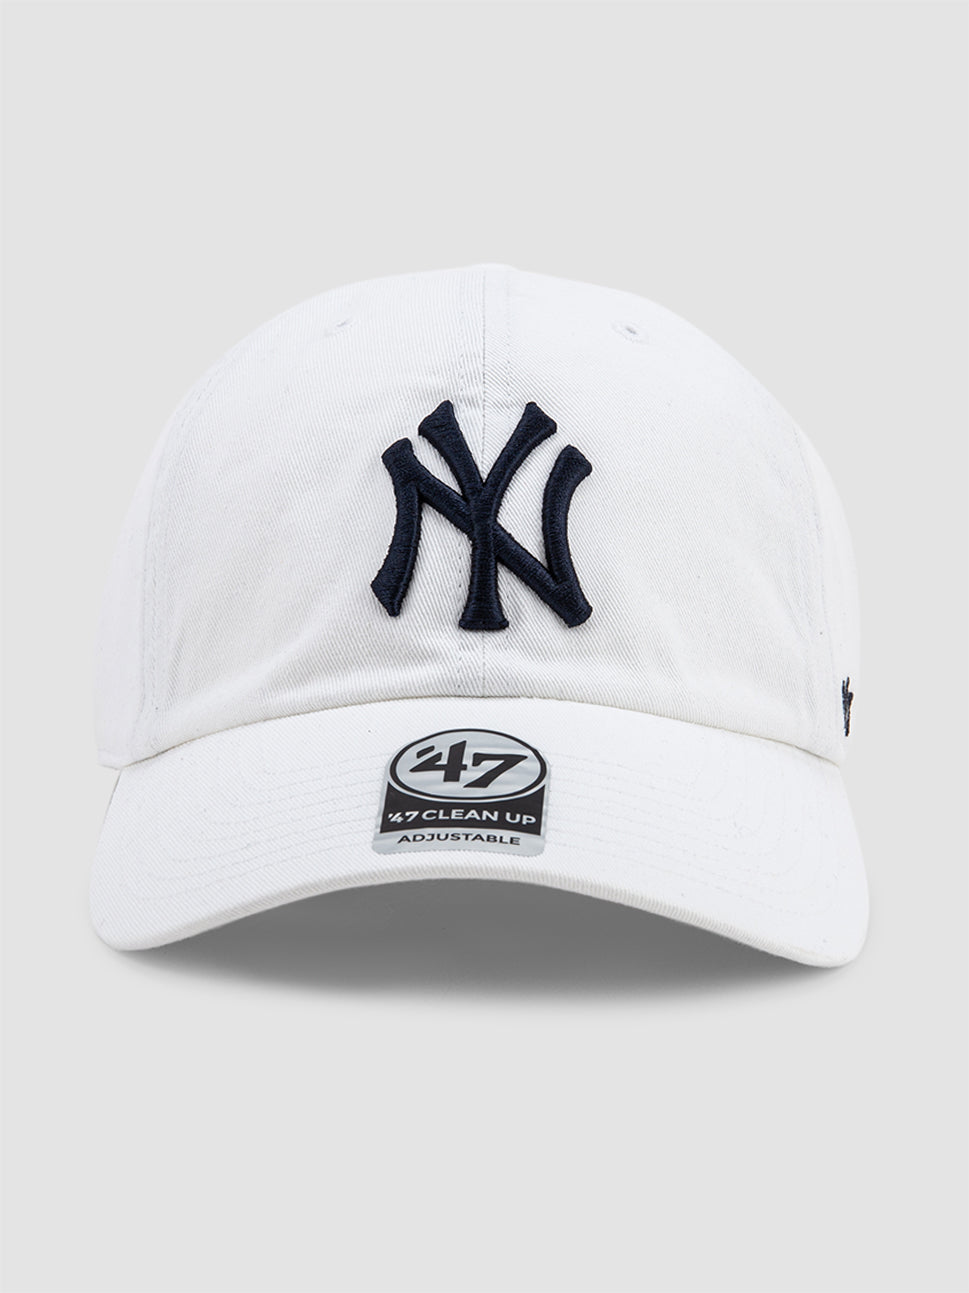 Shop latest trending White color '47 Caps & Headwear Online in UAE 